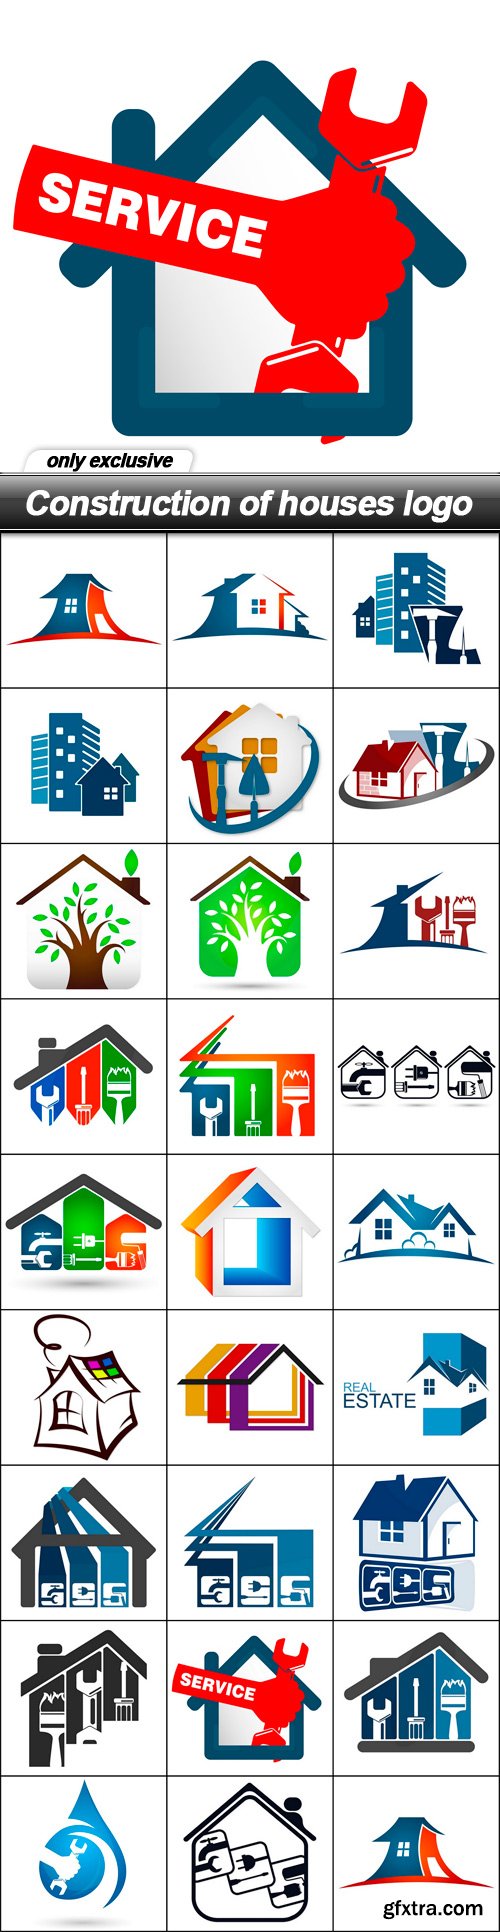 Construction of houses logo - 26 EPS